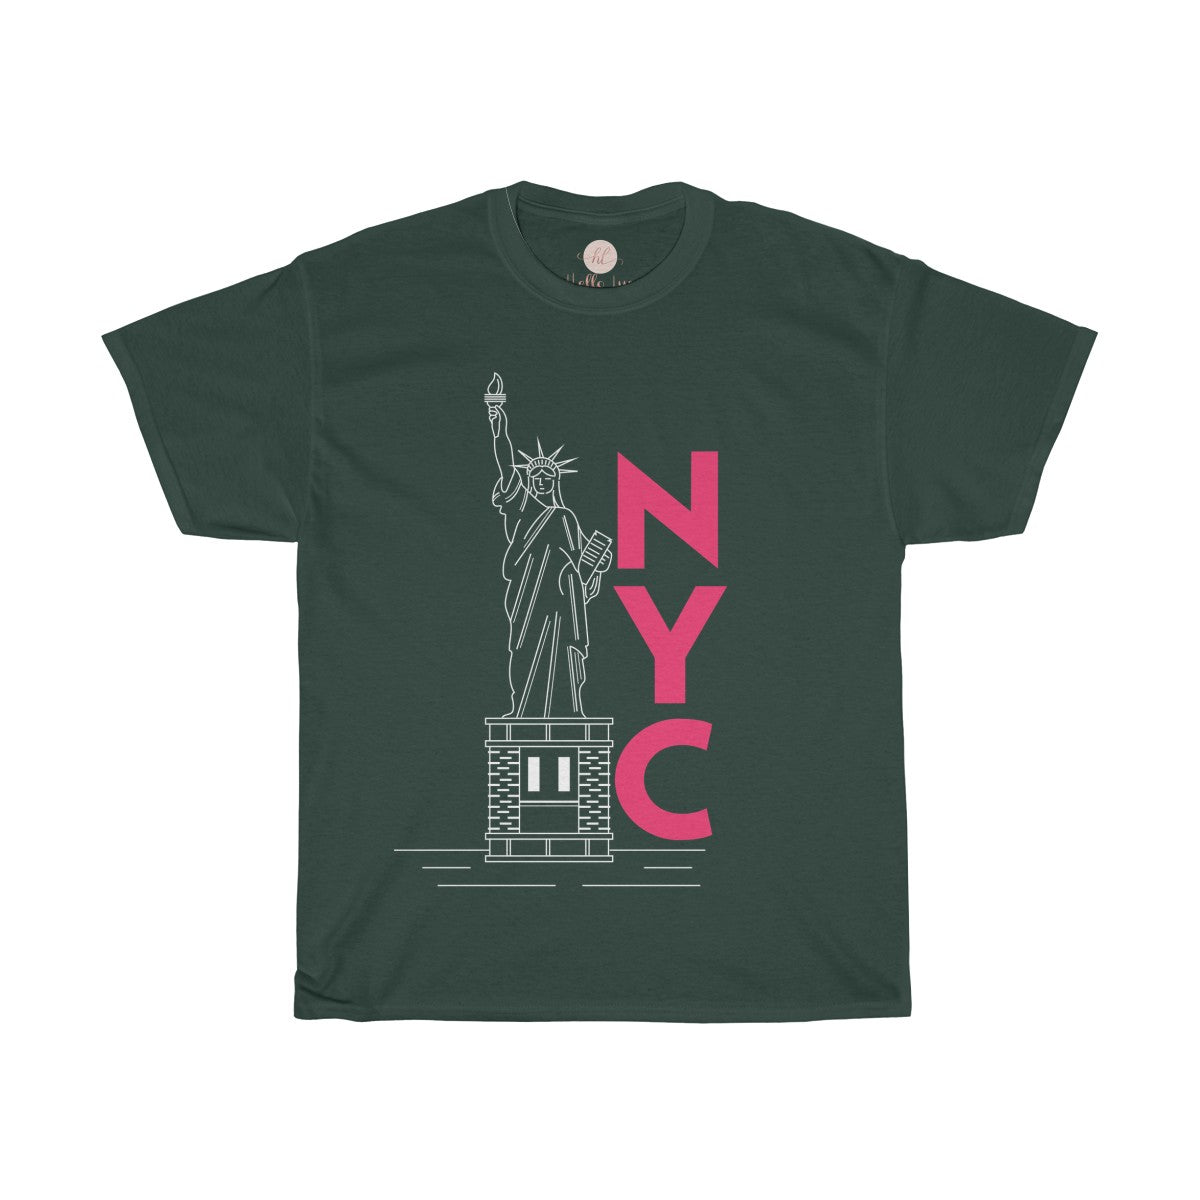 NYC Tee| NYC Fashion Tee| NYC T-shirt| New York Tee